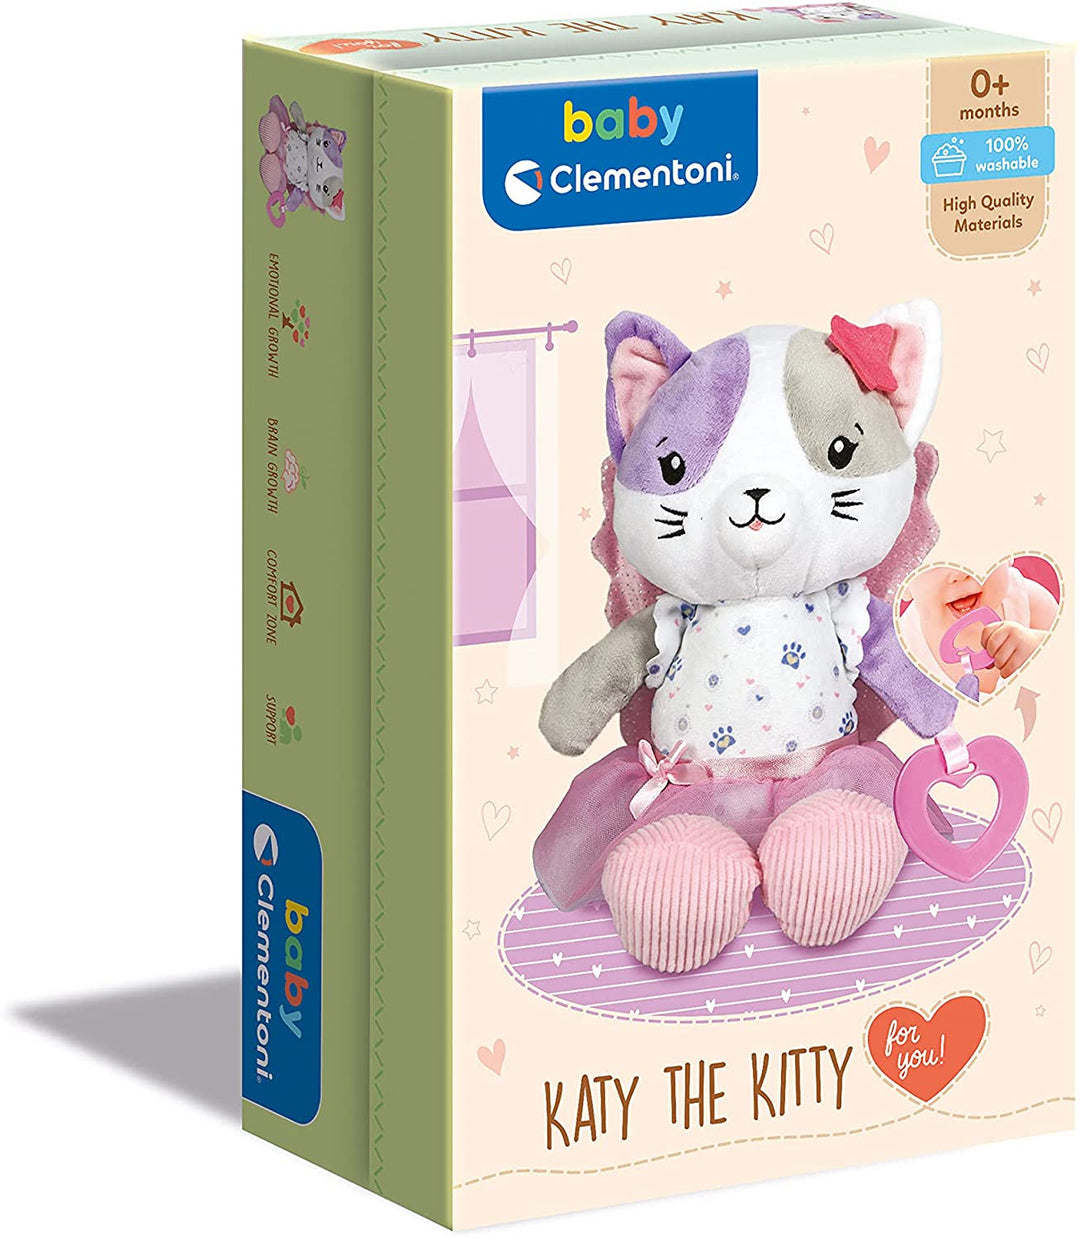 Clementoni 17420 Gatito Katy The Kitty Plüschtier für Babys ab 0 Monaten,